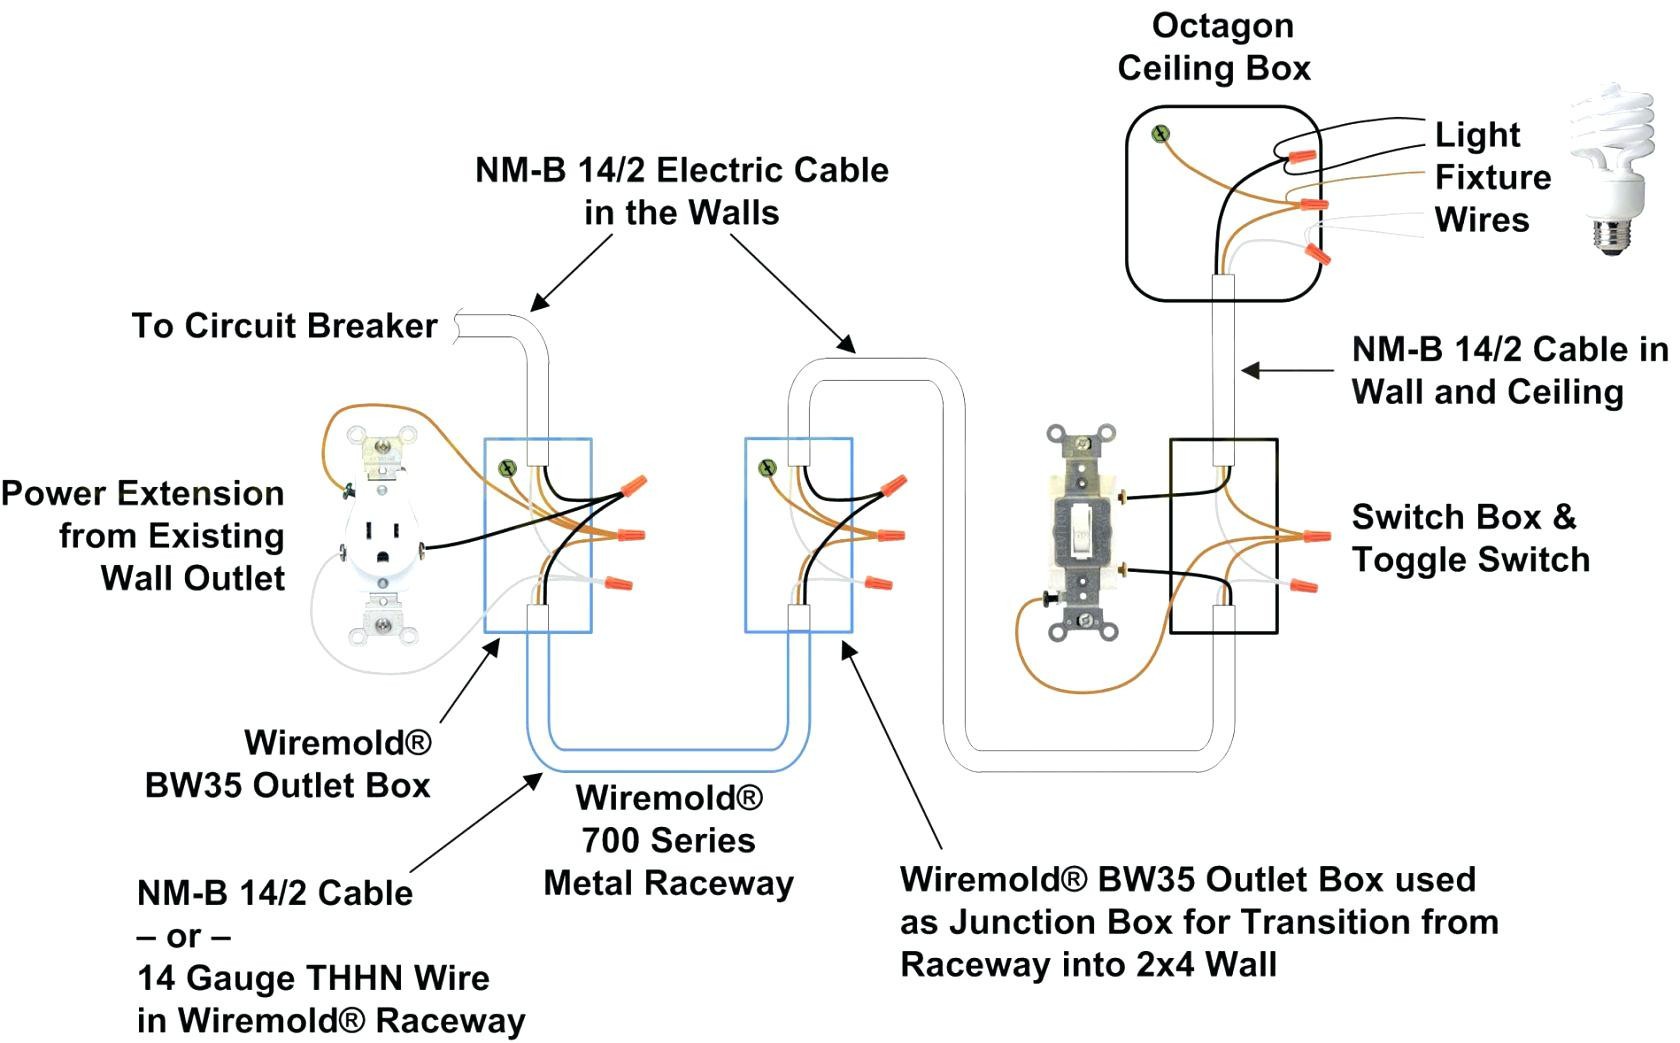 30 and twist lock plug wiring diagram at diagrams new 3 natebird me twist lock plug